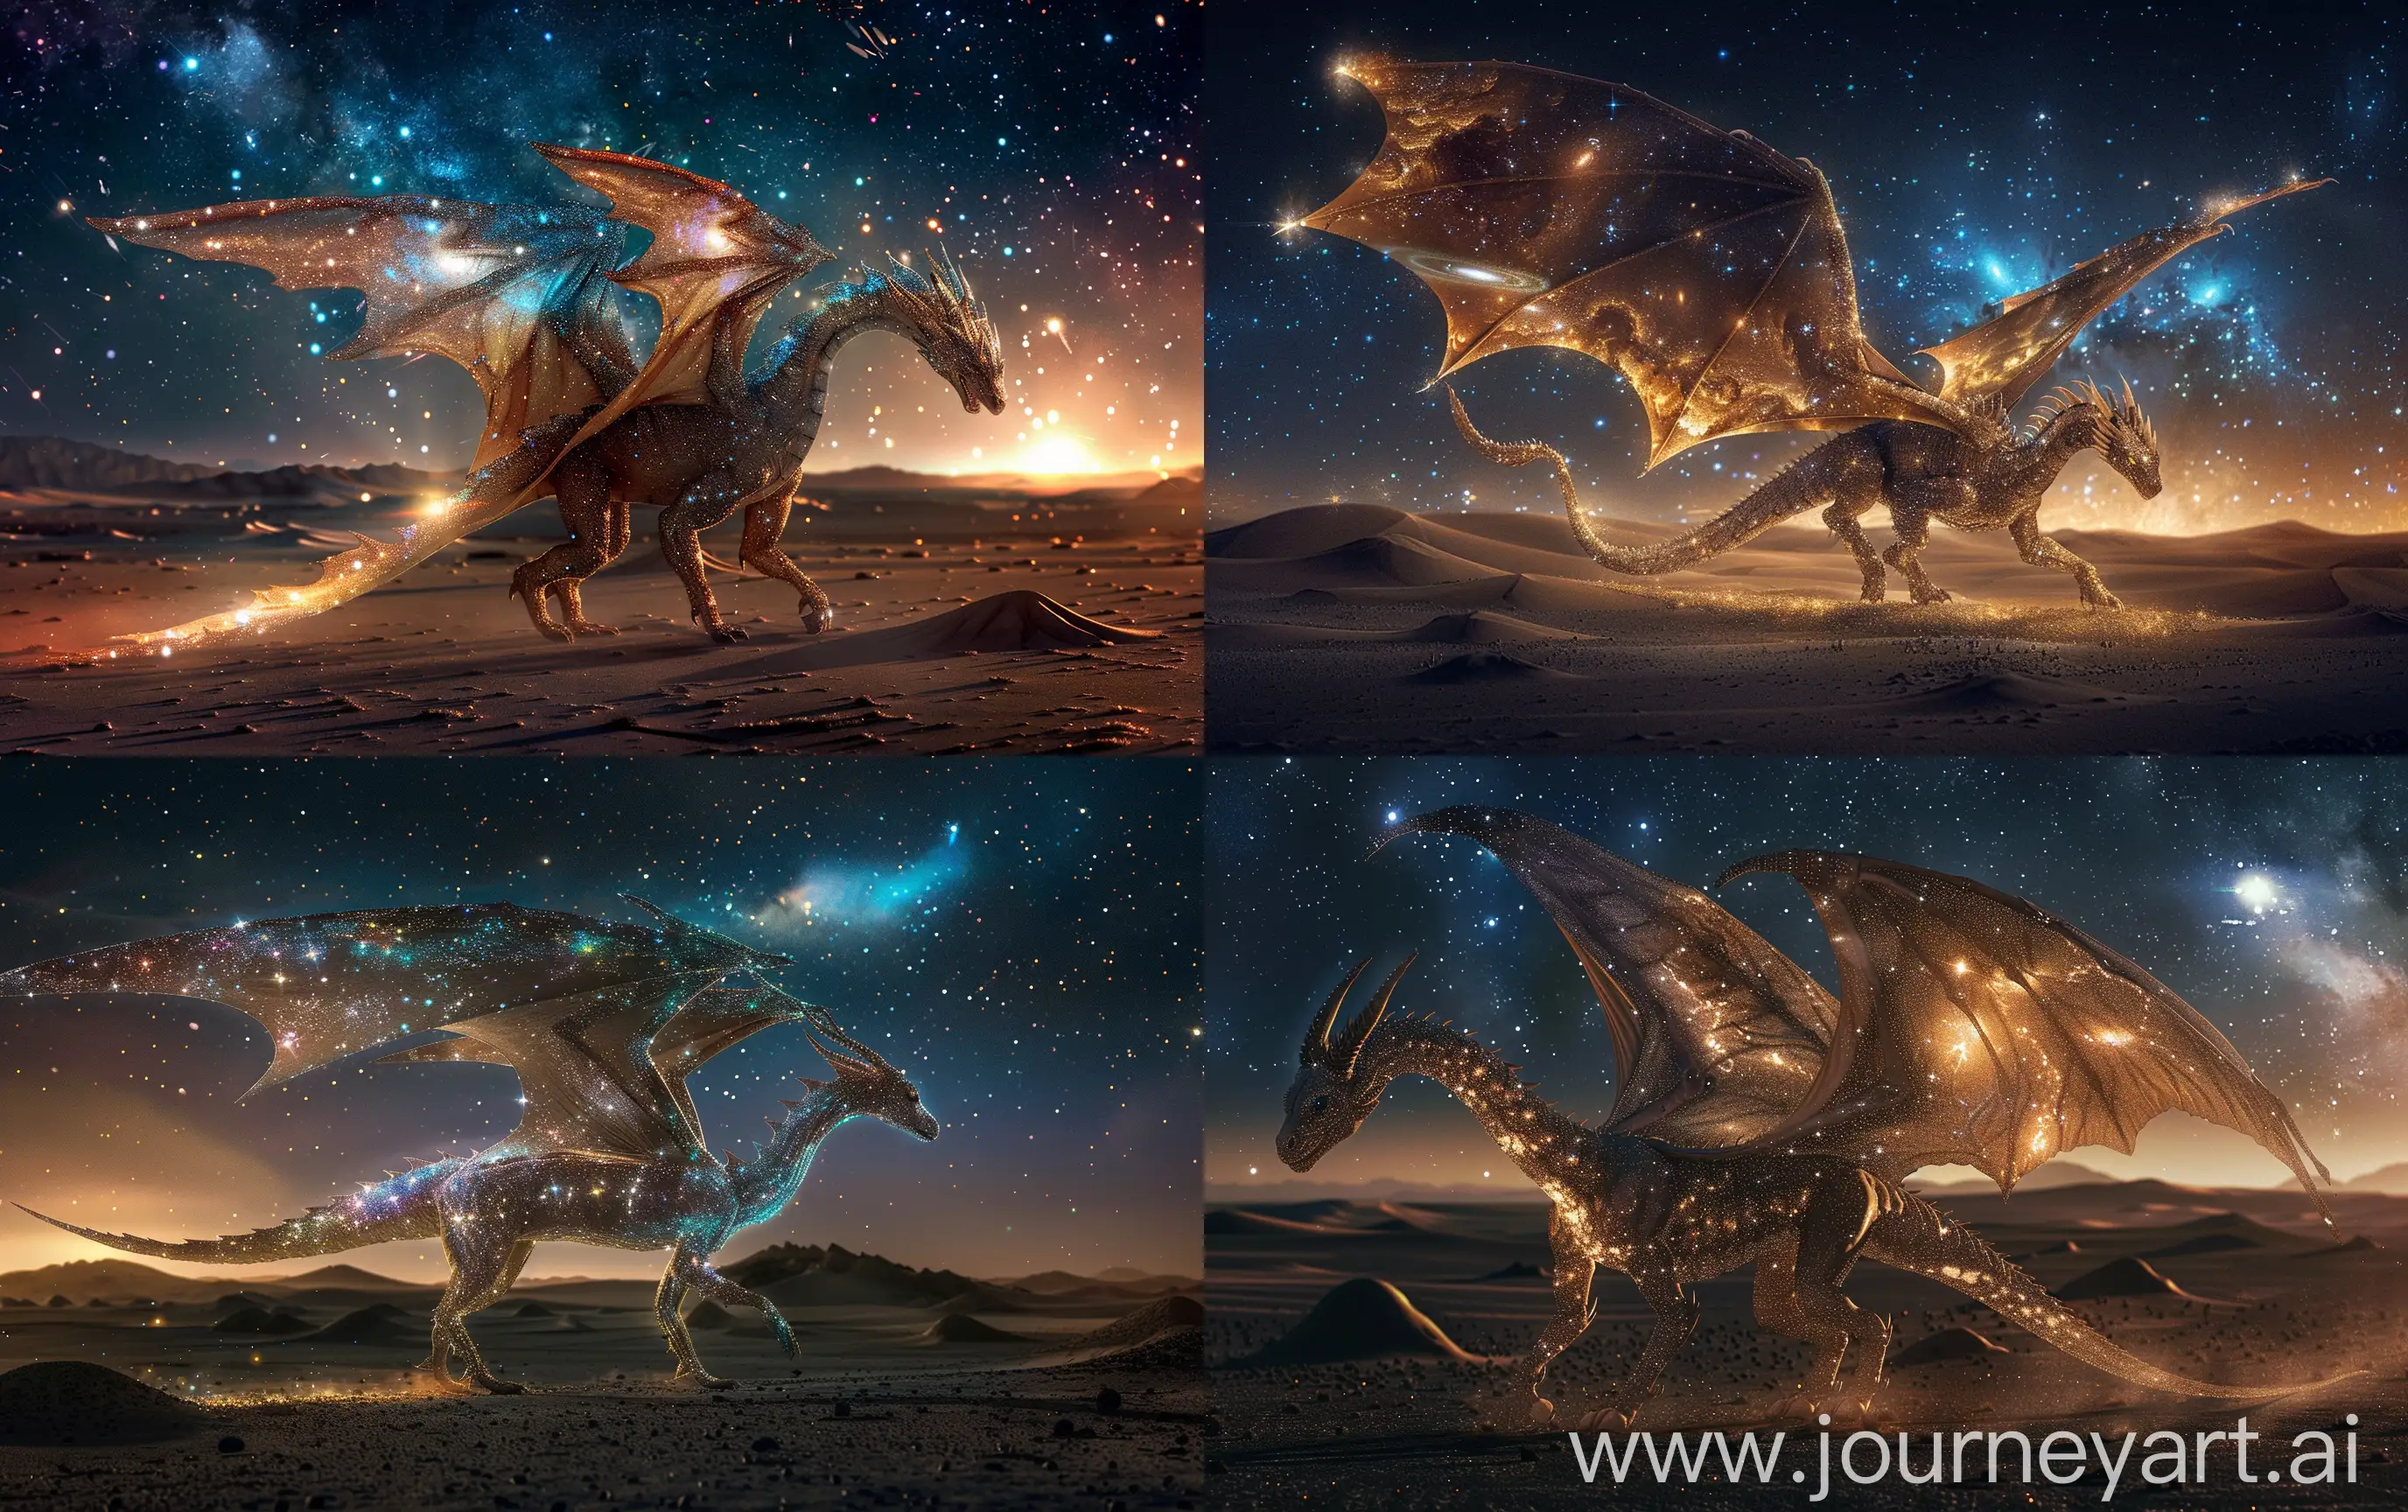 Starry-Winged-Dragon-Roaming-the-Night-Desert